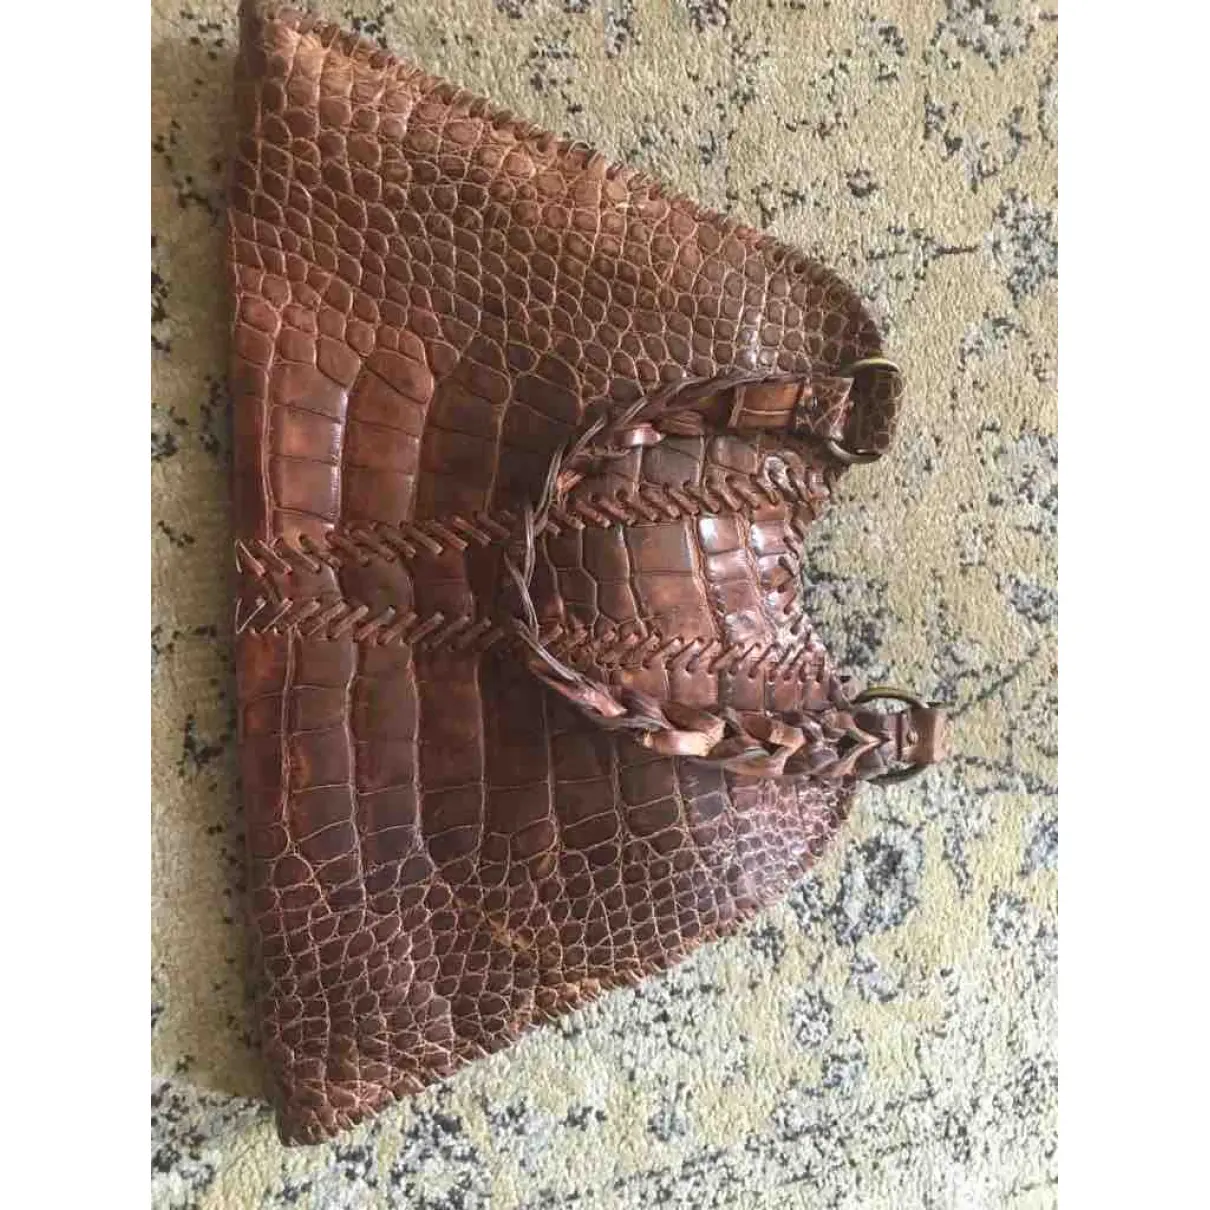 Crocodile handbag Fendi - Vintage